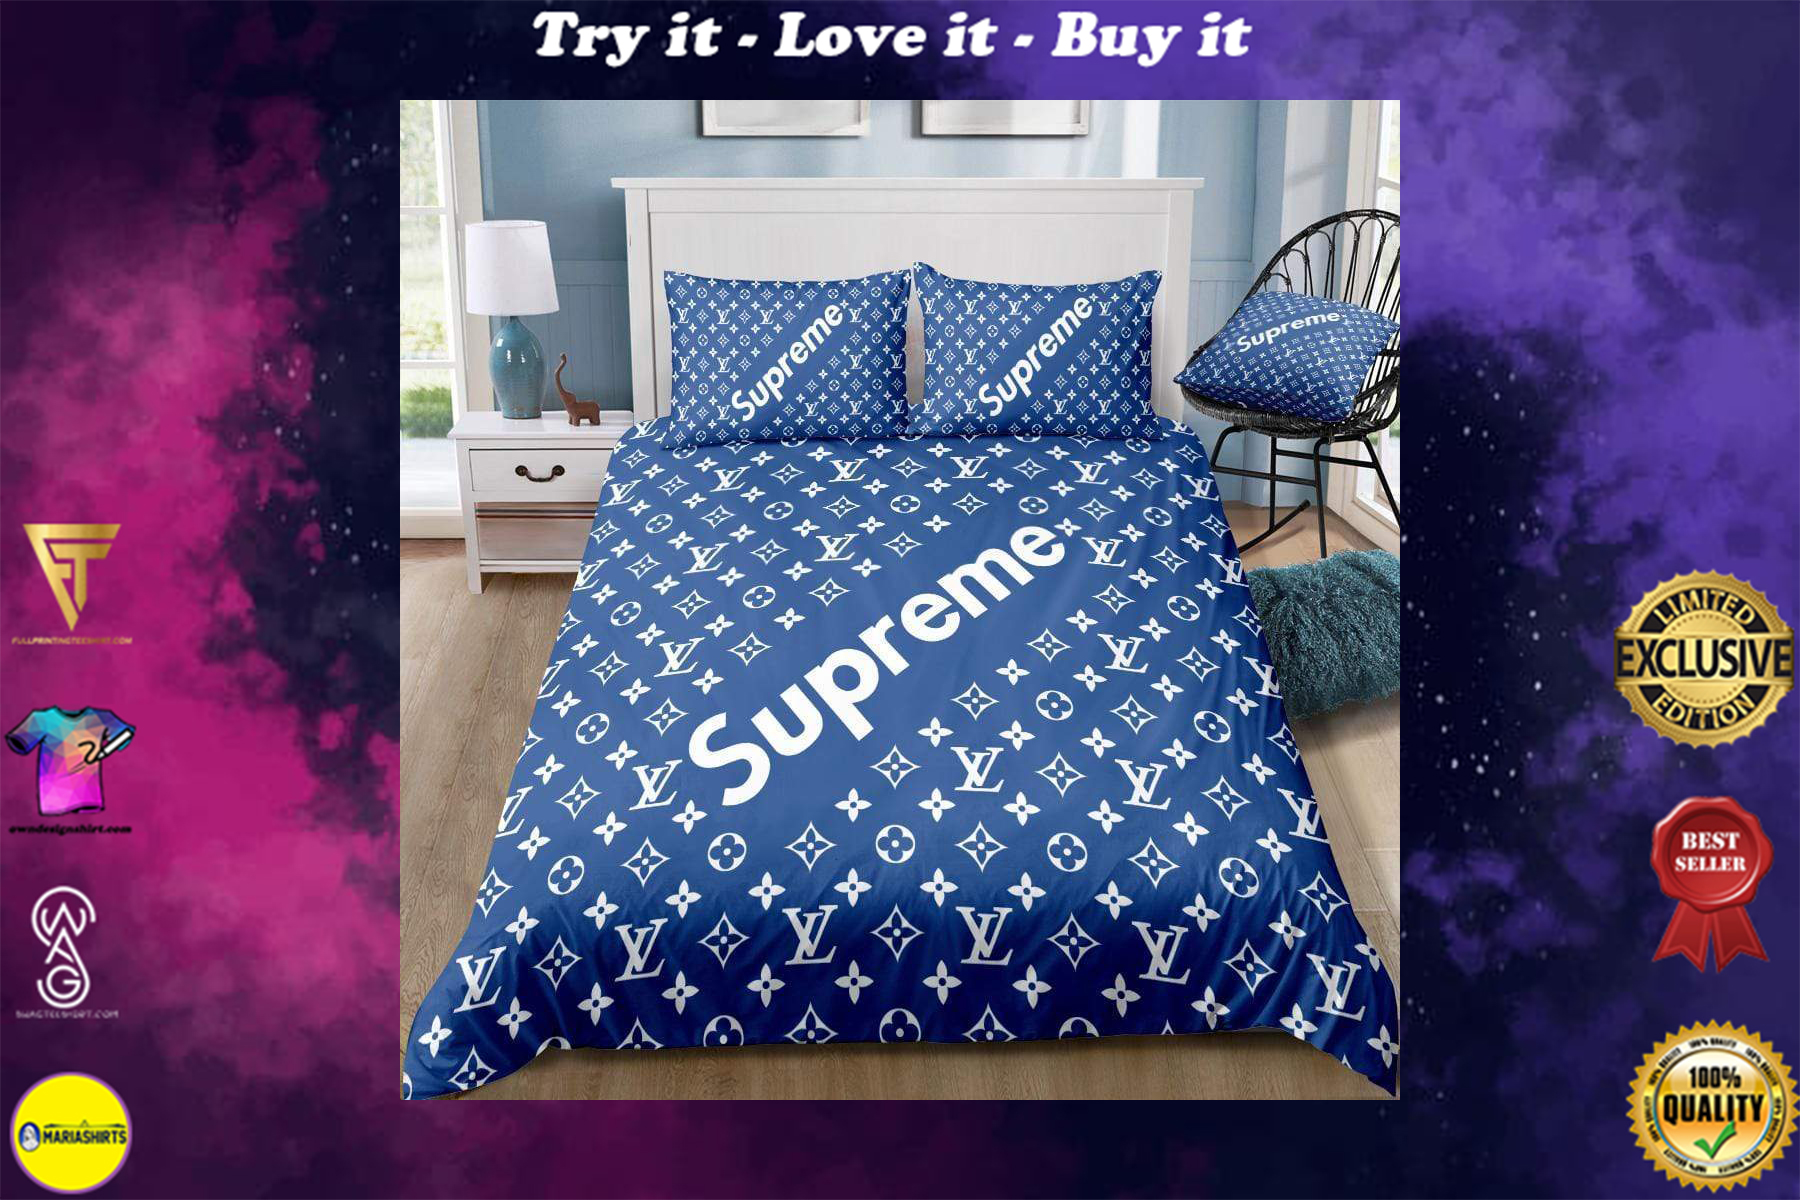 LV x Supreme Blue Bedding Set